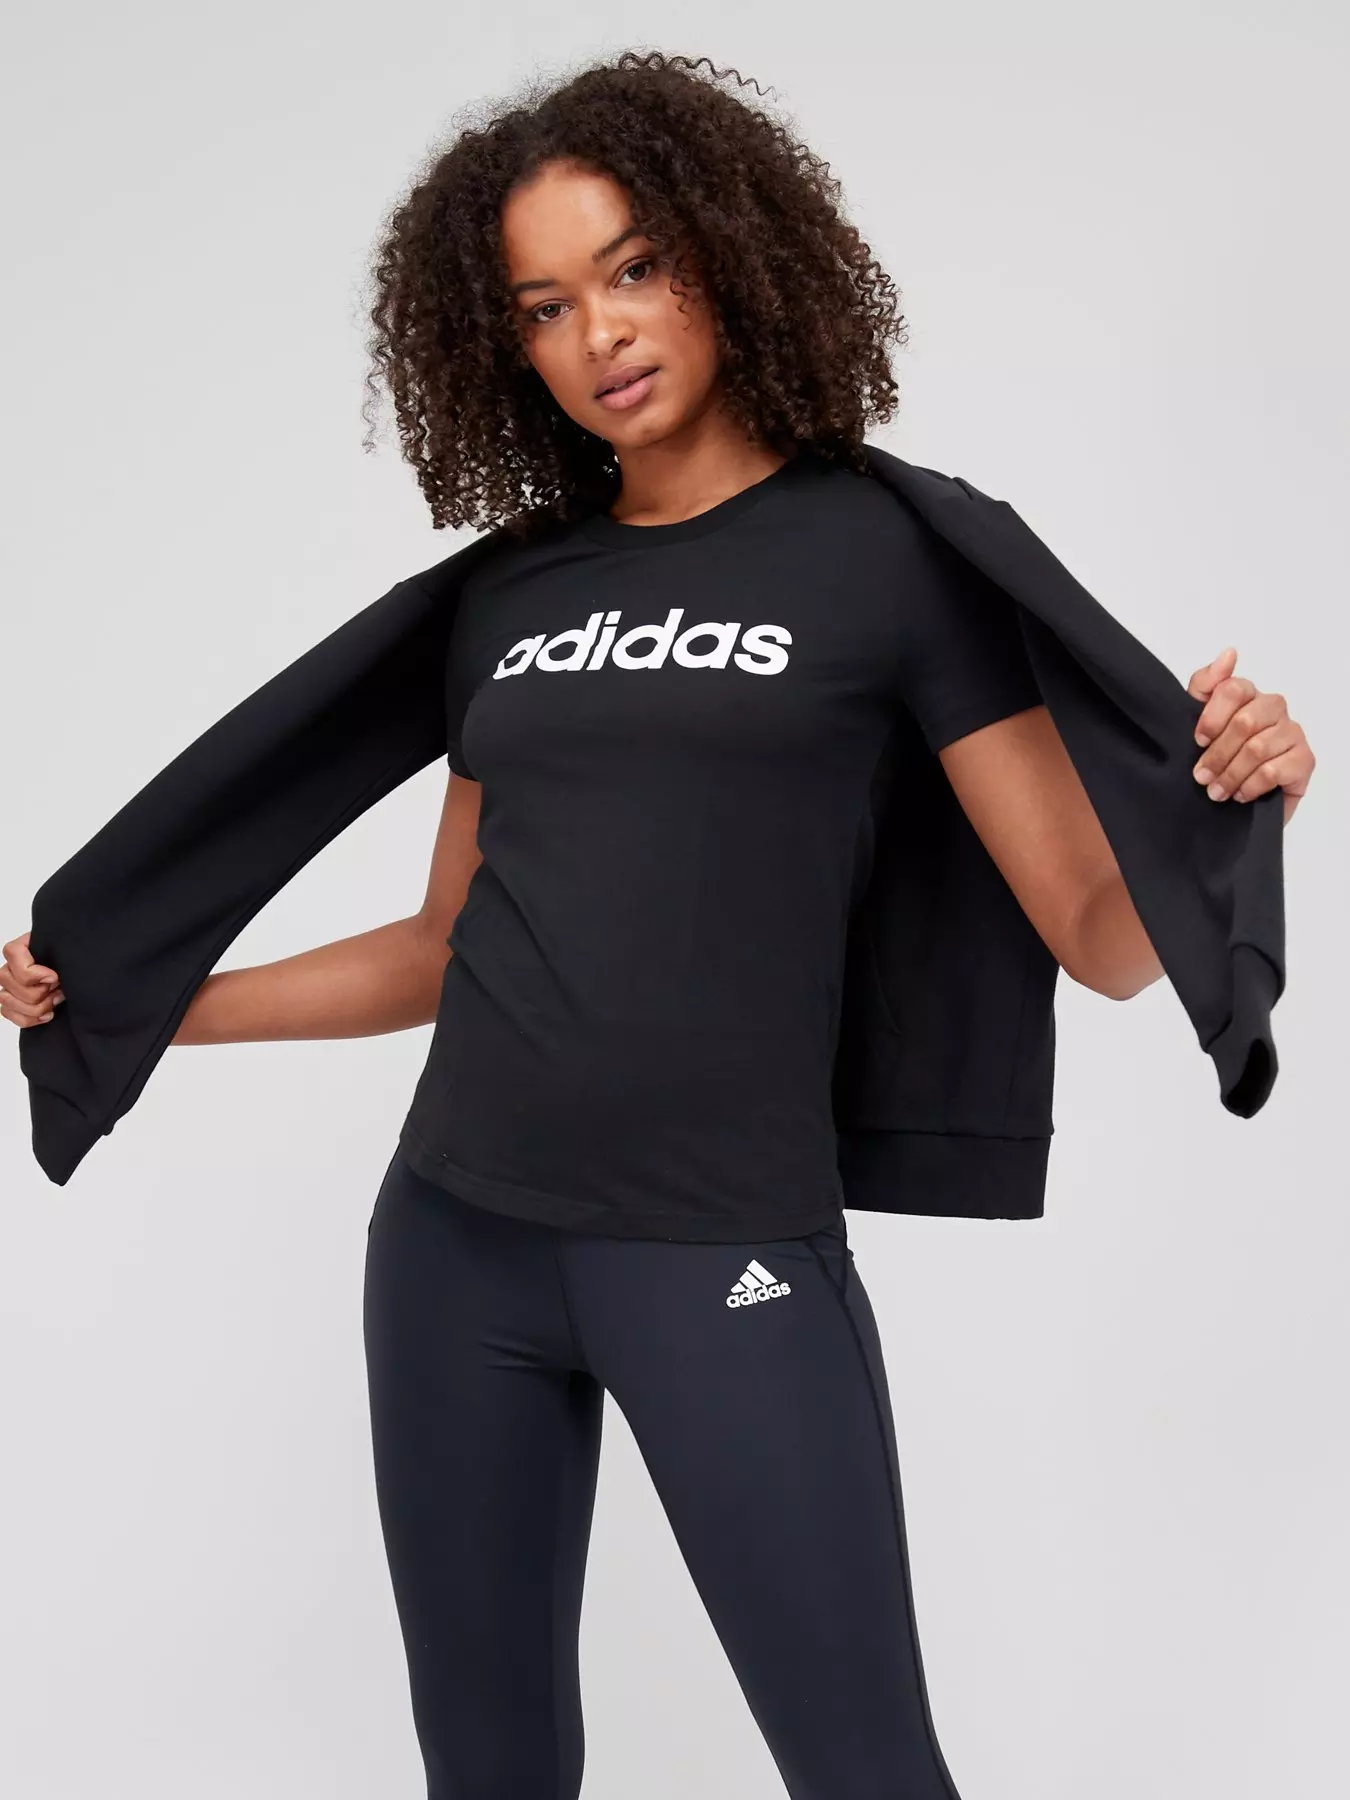 Black | Adidas sportswear | Women | Very t-shirts Ireland & | Tops